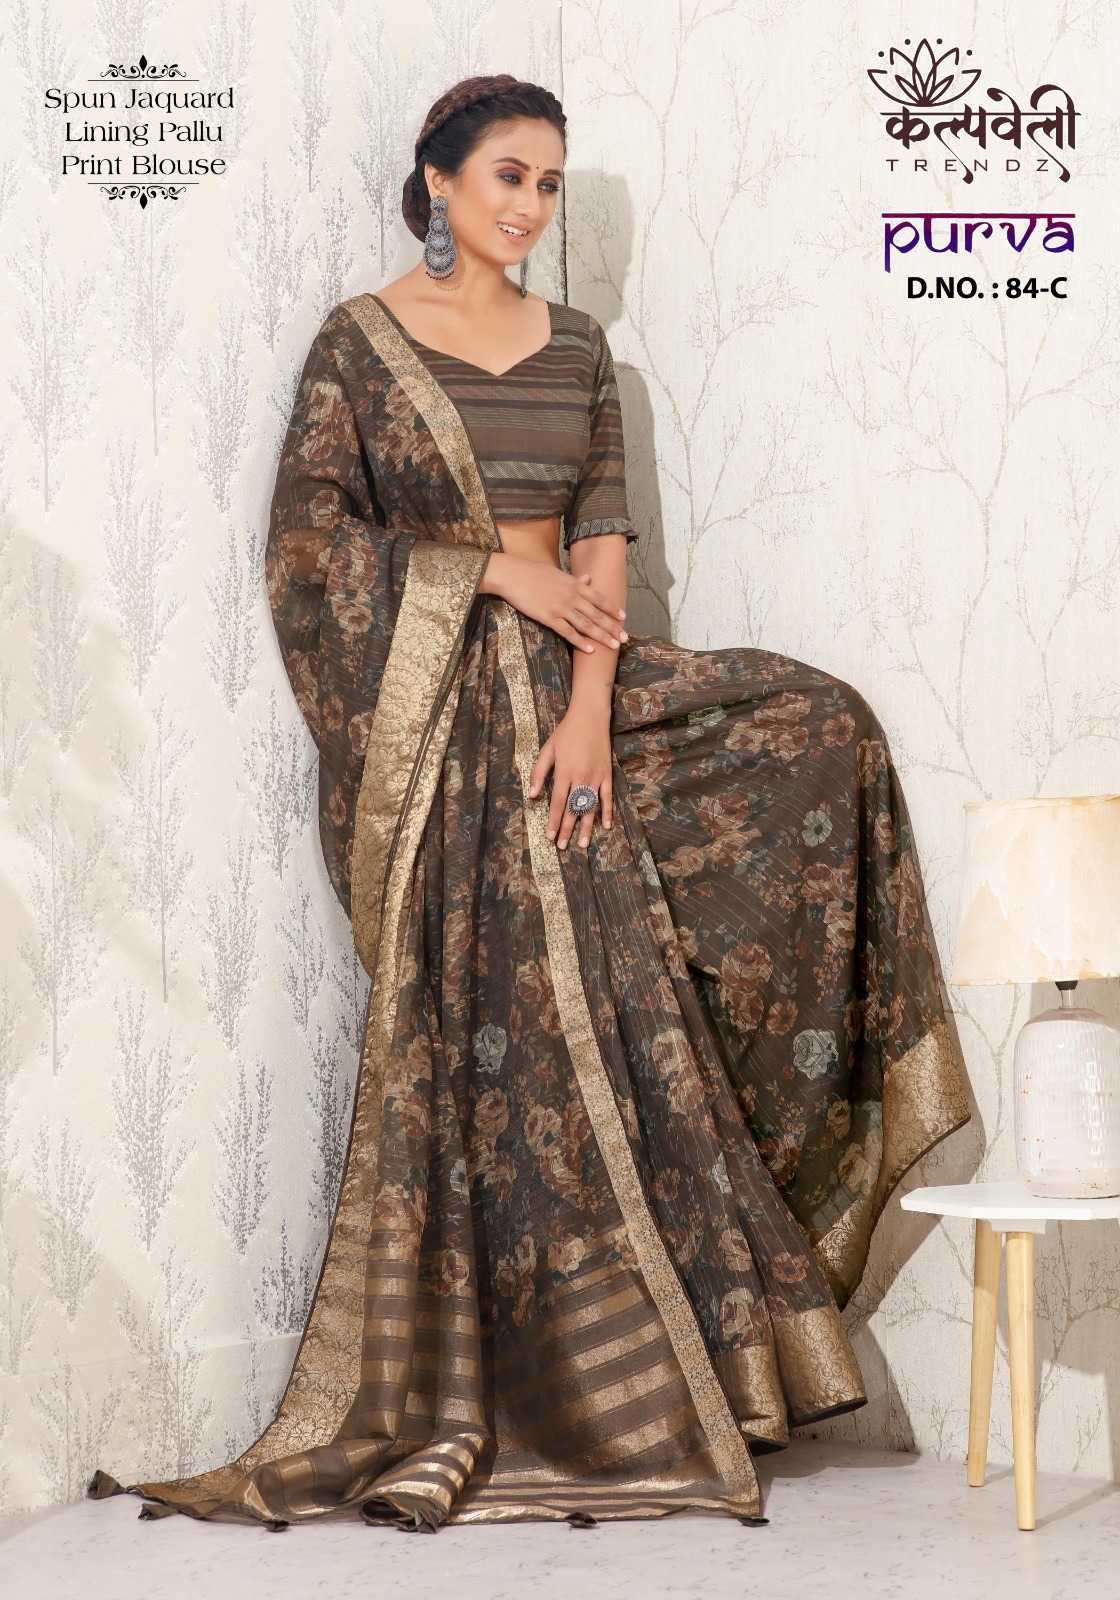 kalpavelly trendz purva 84 cotton party wear beautiful saree with digital print blouse